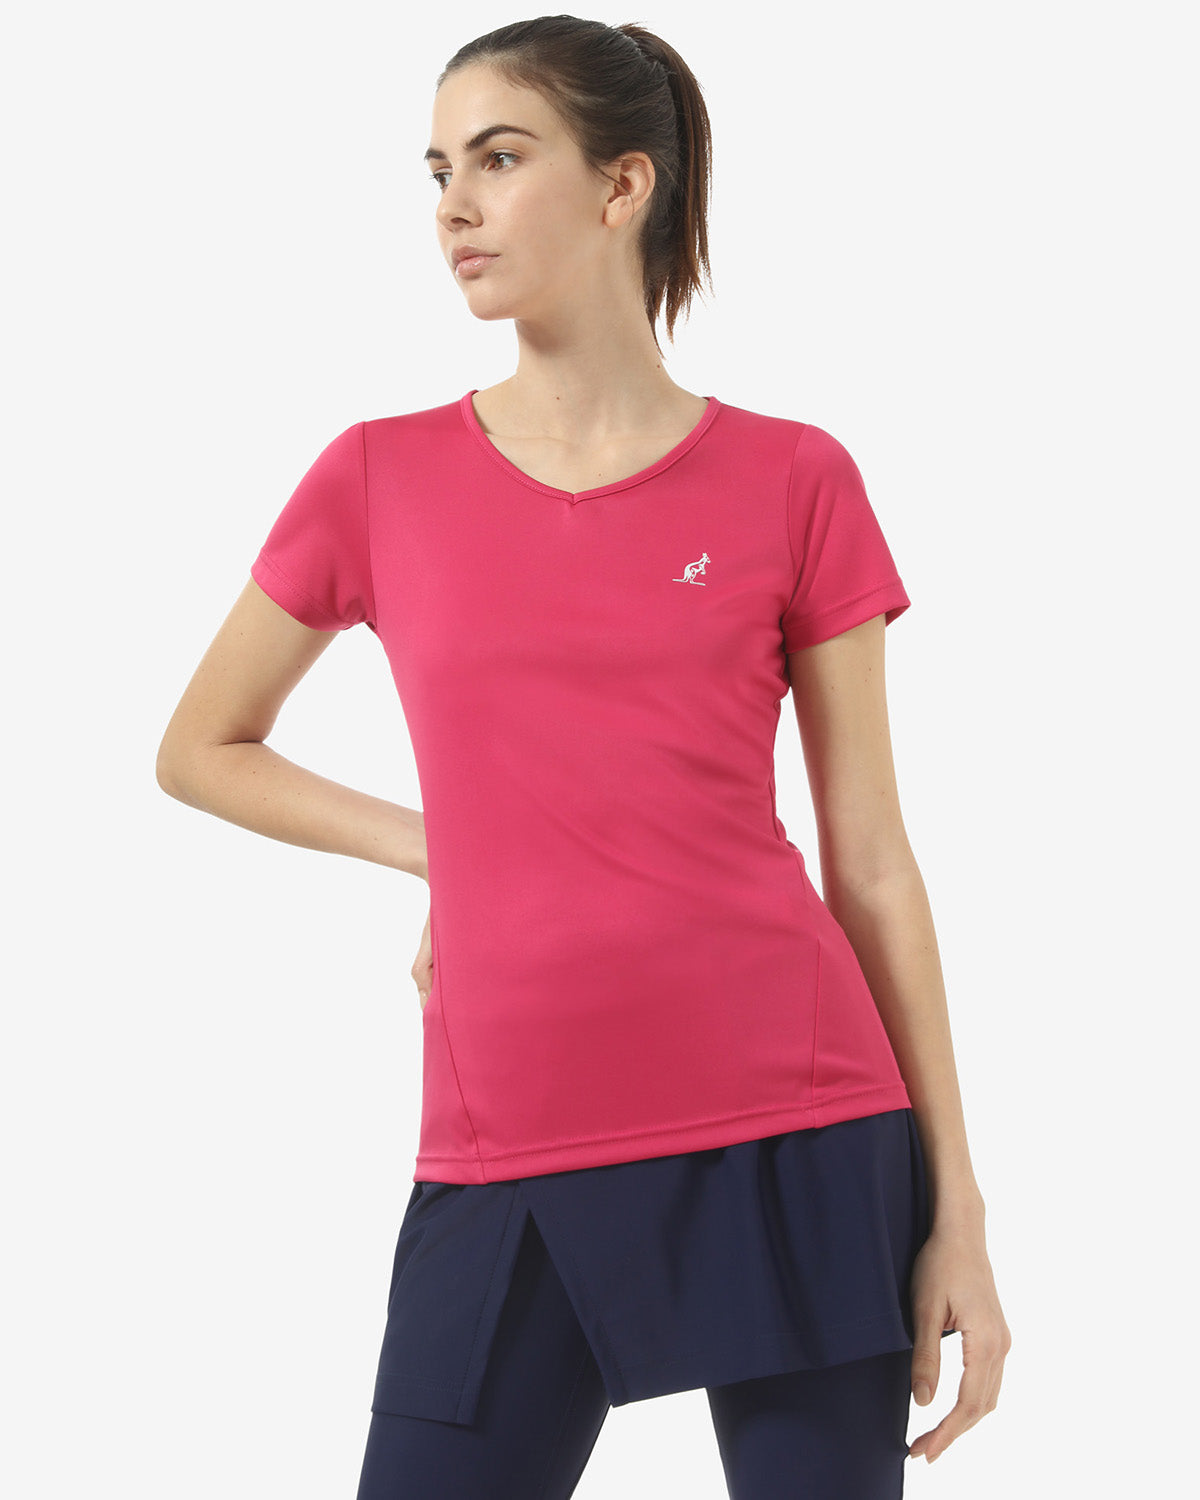 Drop T-Shirt: Asutralian Tennis